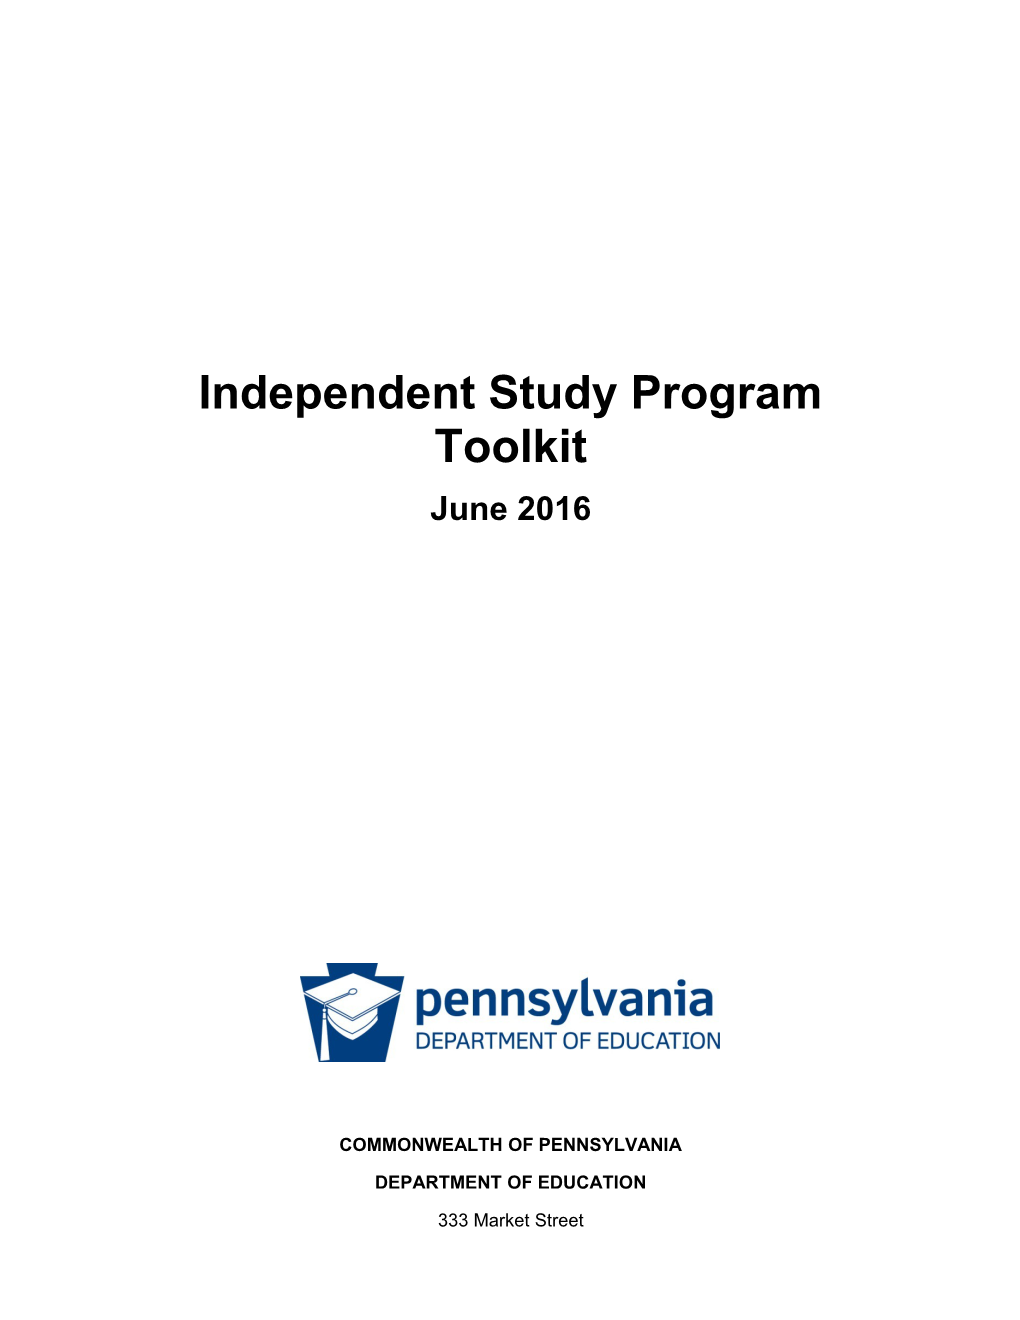 Independent Study Program Toolkit